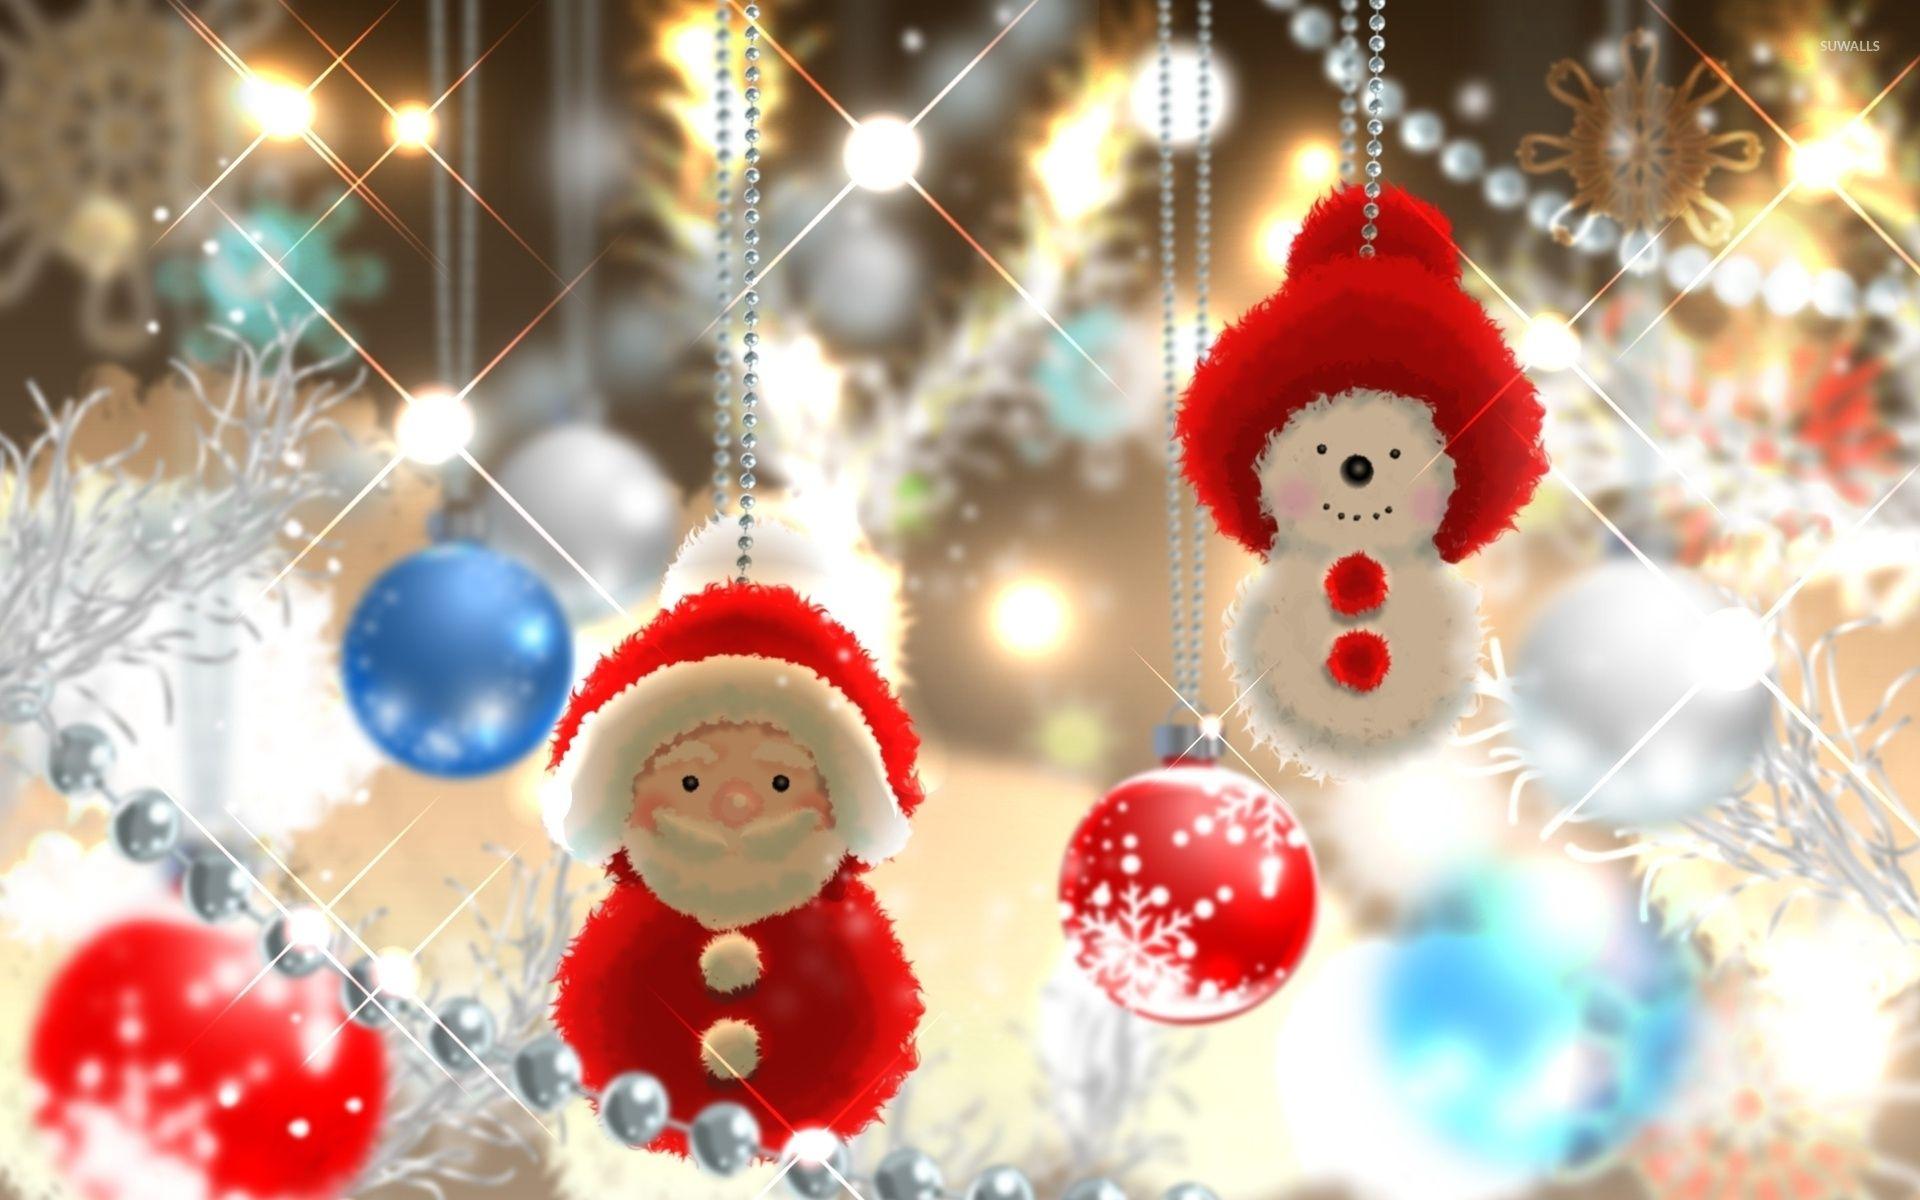 Cute Santa and snowman in the Christmas tree wallpaper wallpaper